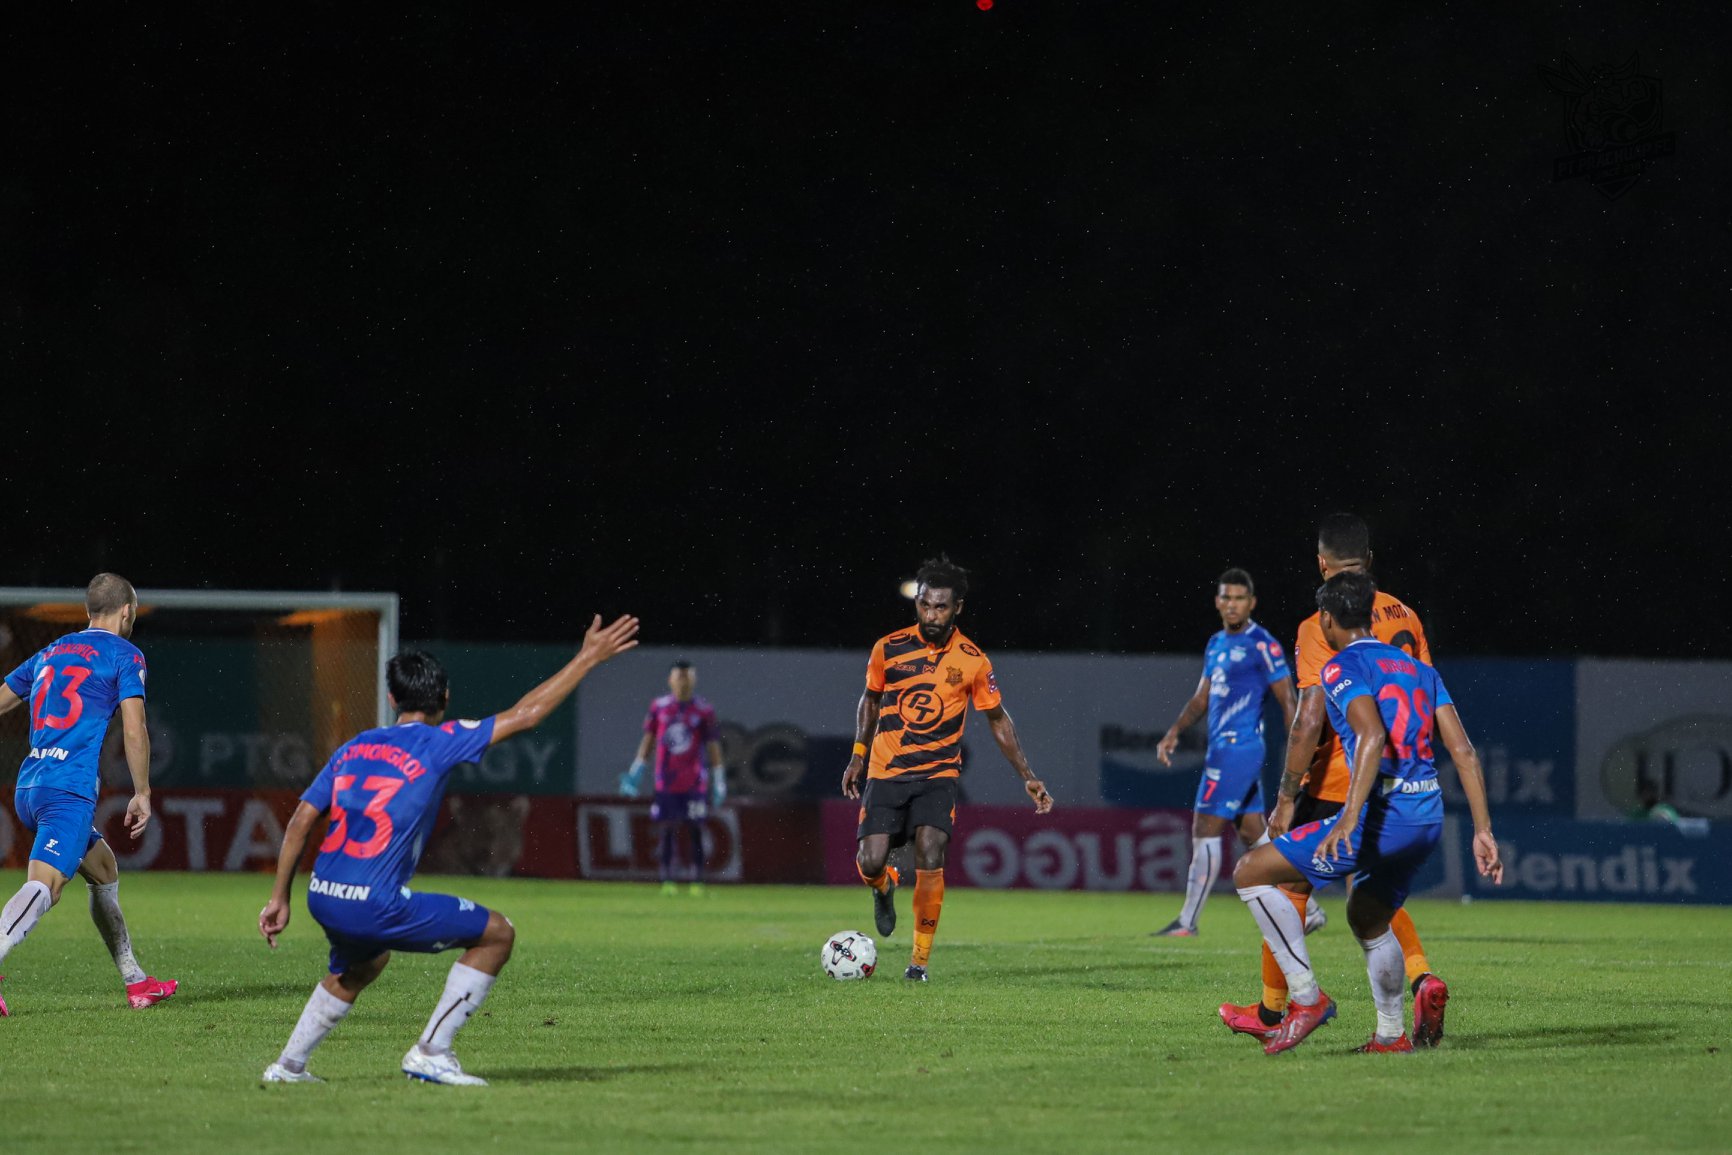 Yanto Basna Tak Tergantikan di Liga Thailand 1, Timnya Akhirnya Menang